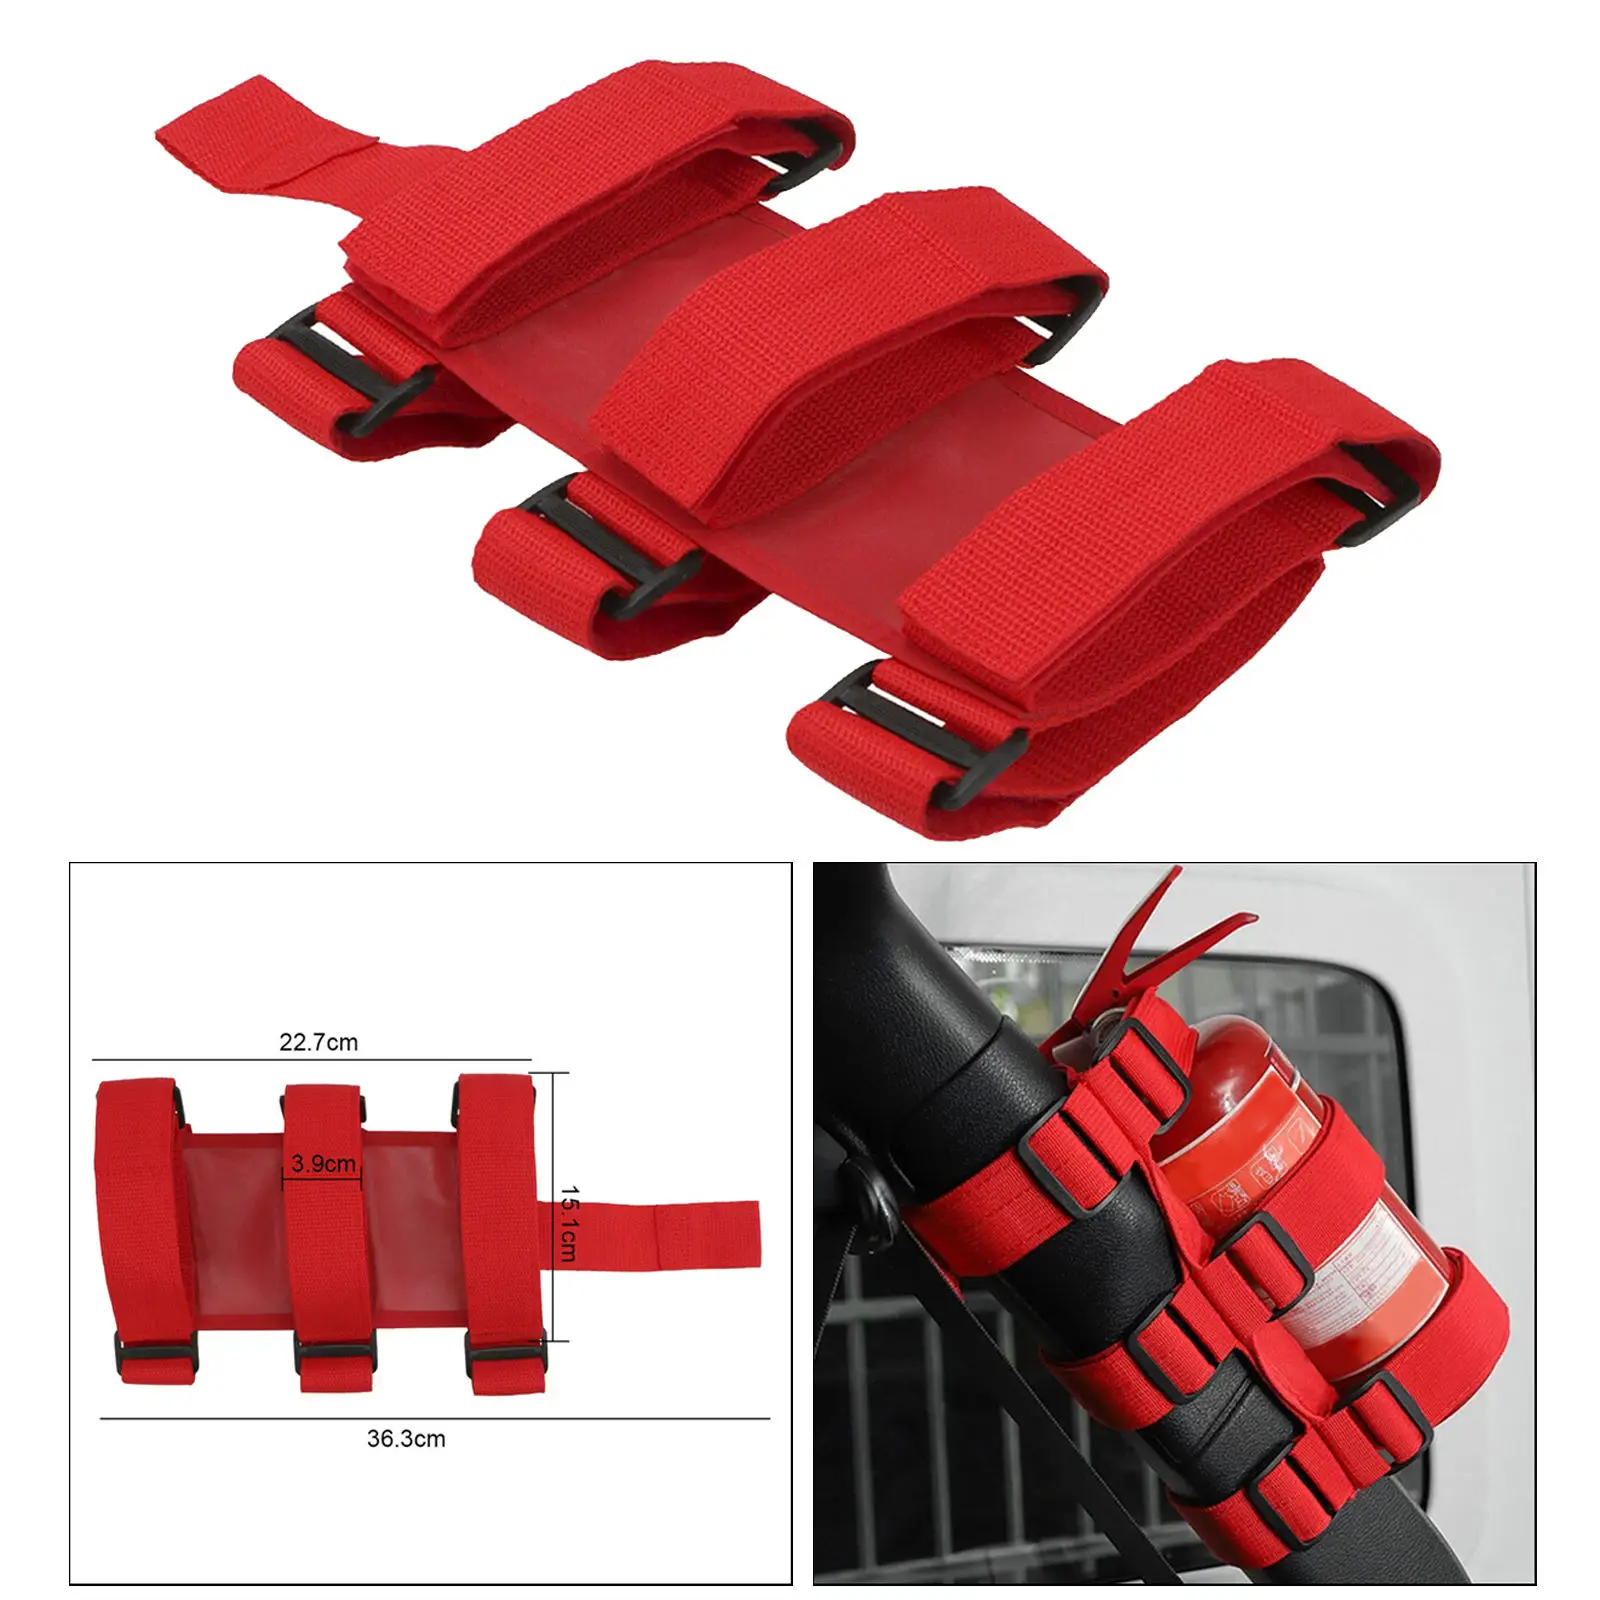 Adjustable Roll Bar Fire Extinguisher Holder for Jeep Wrangler Accessories 